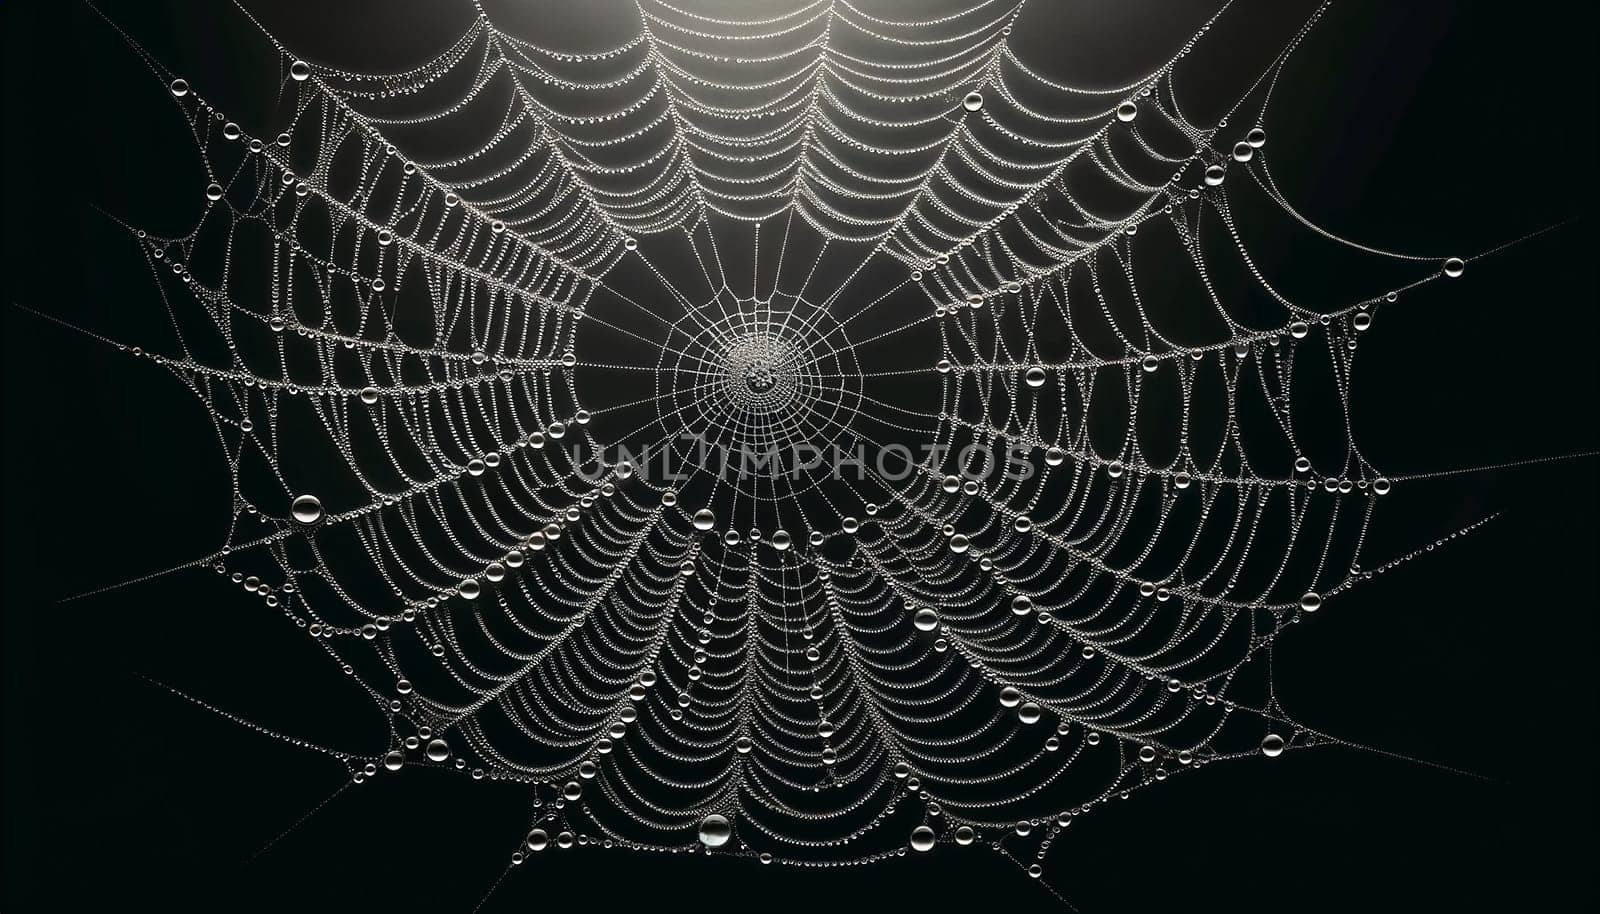 cobweb with dew drops on a black background by Annado